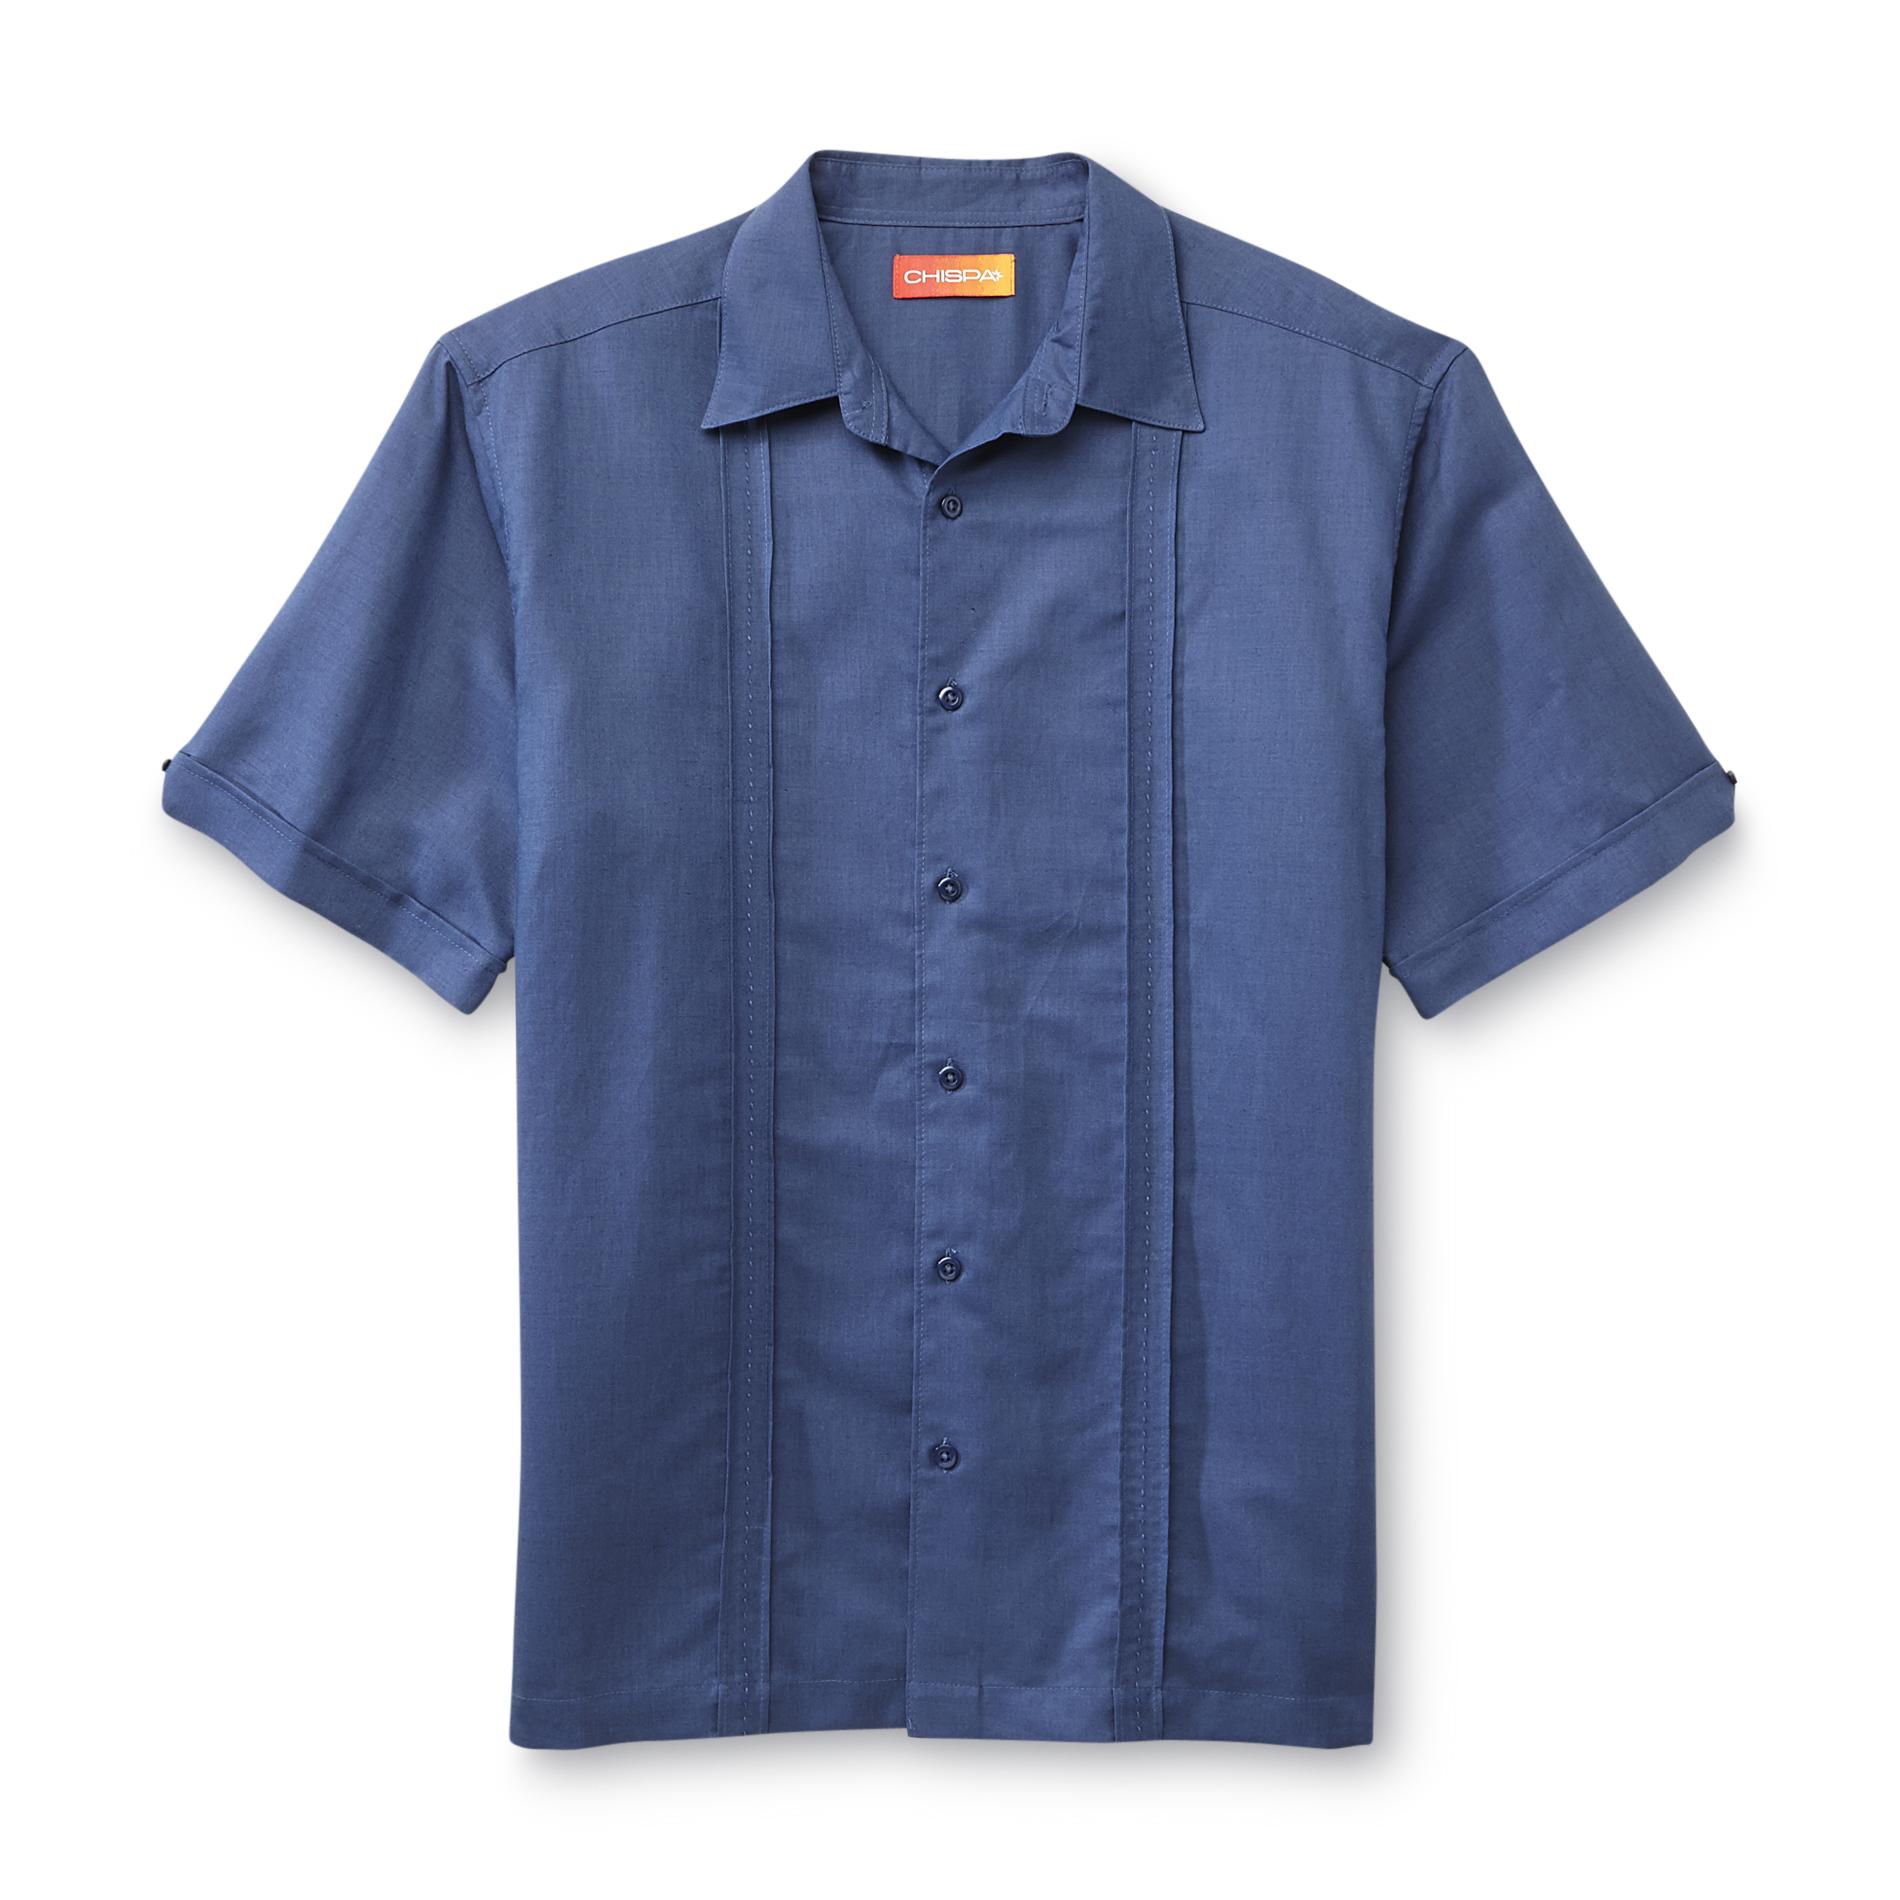 Chispa Men's Short-Sleeve Casual Shirt